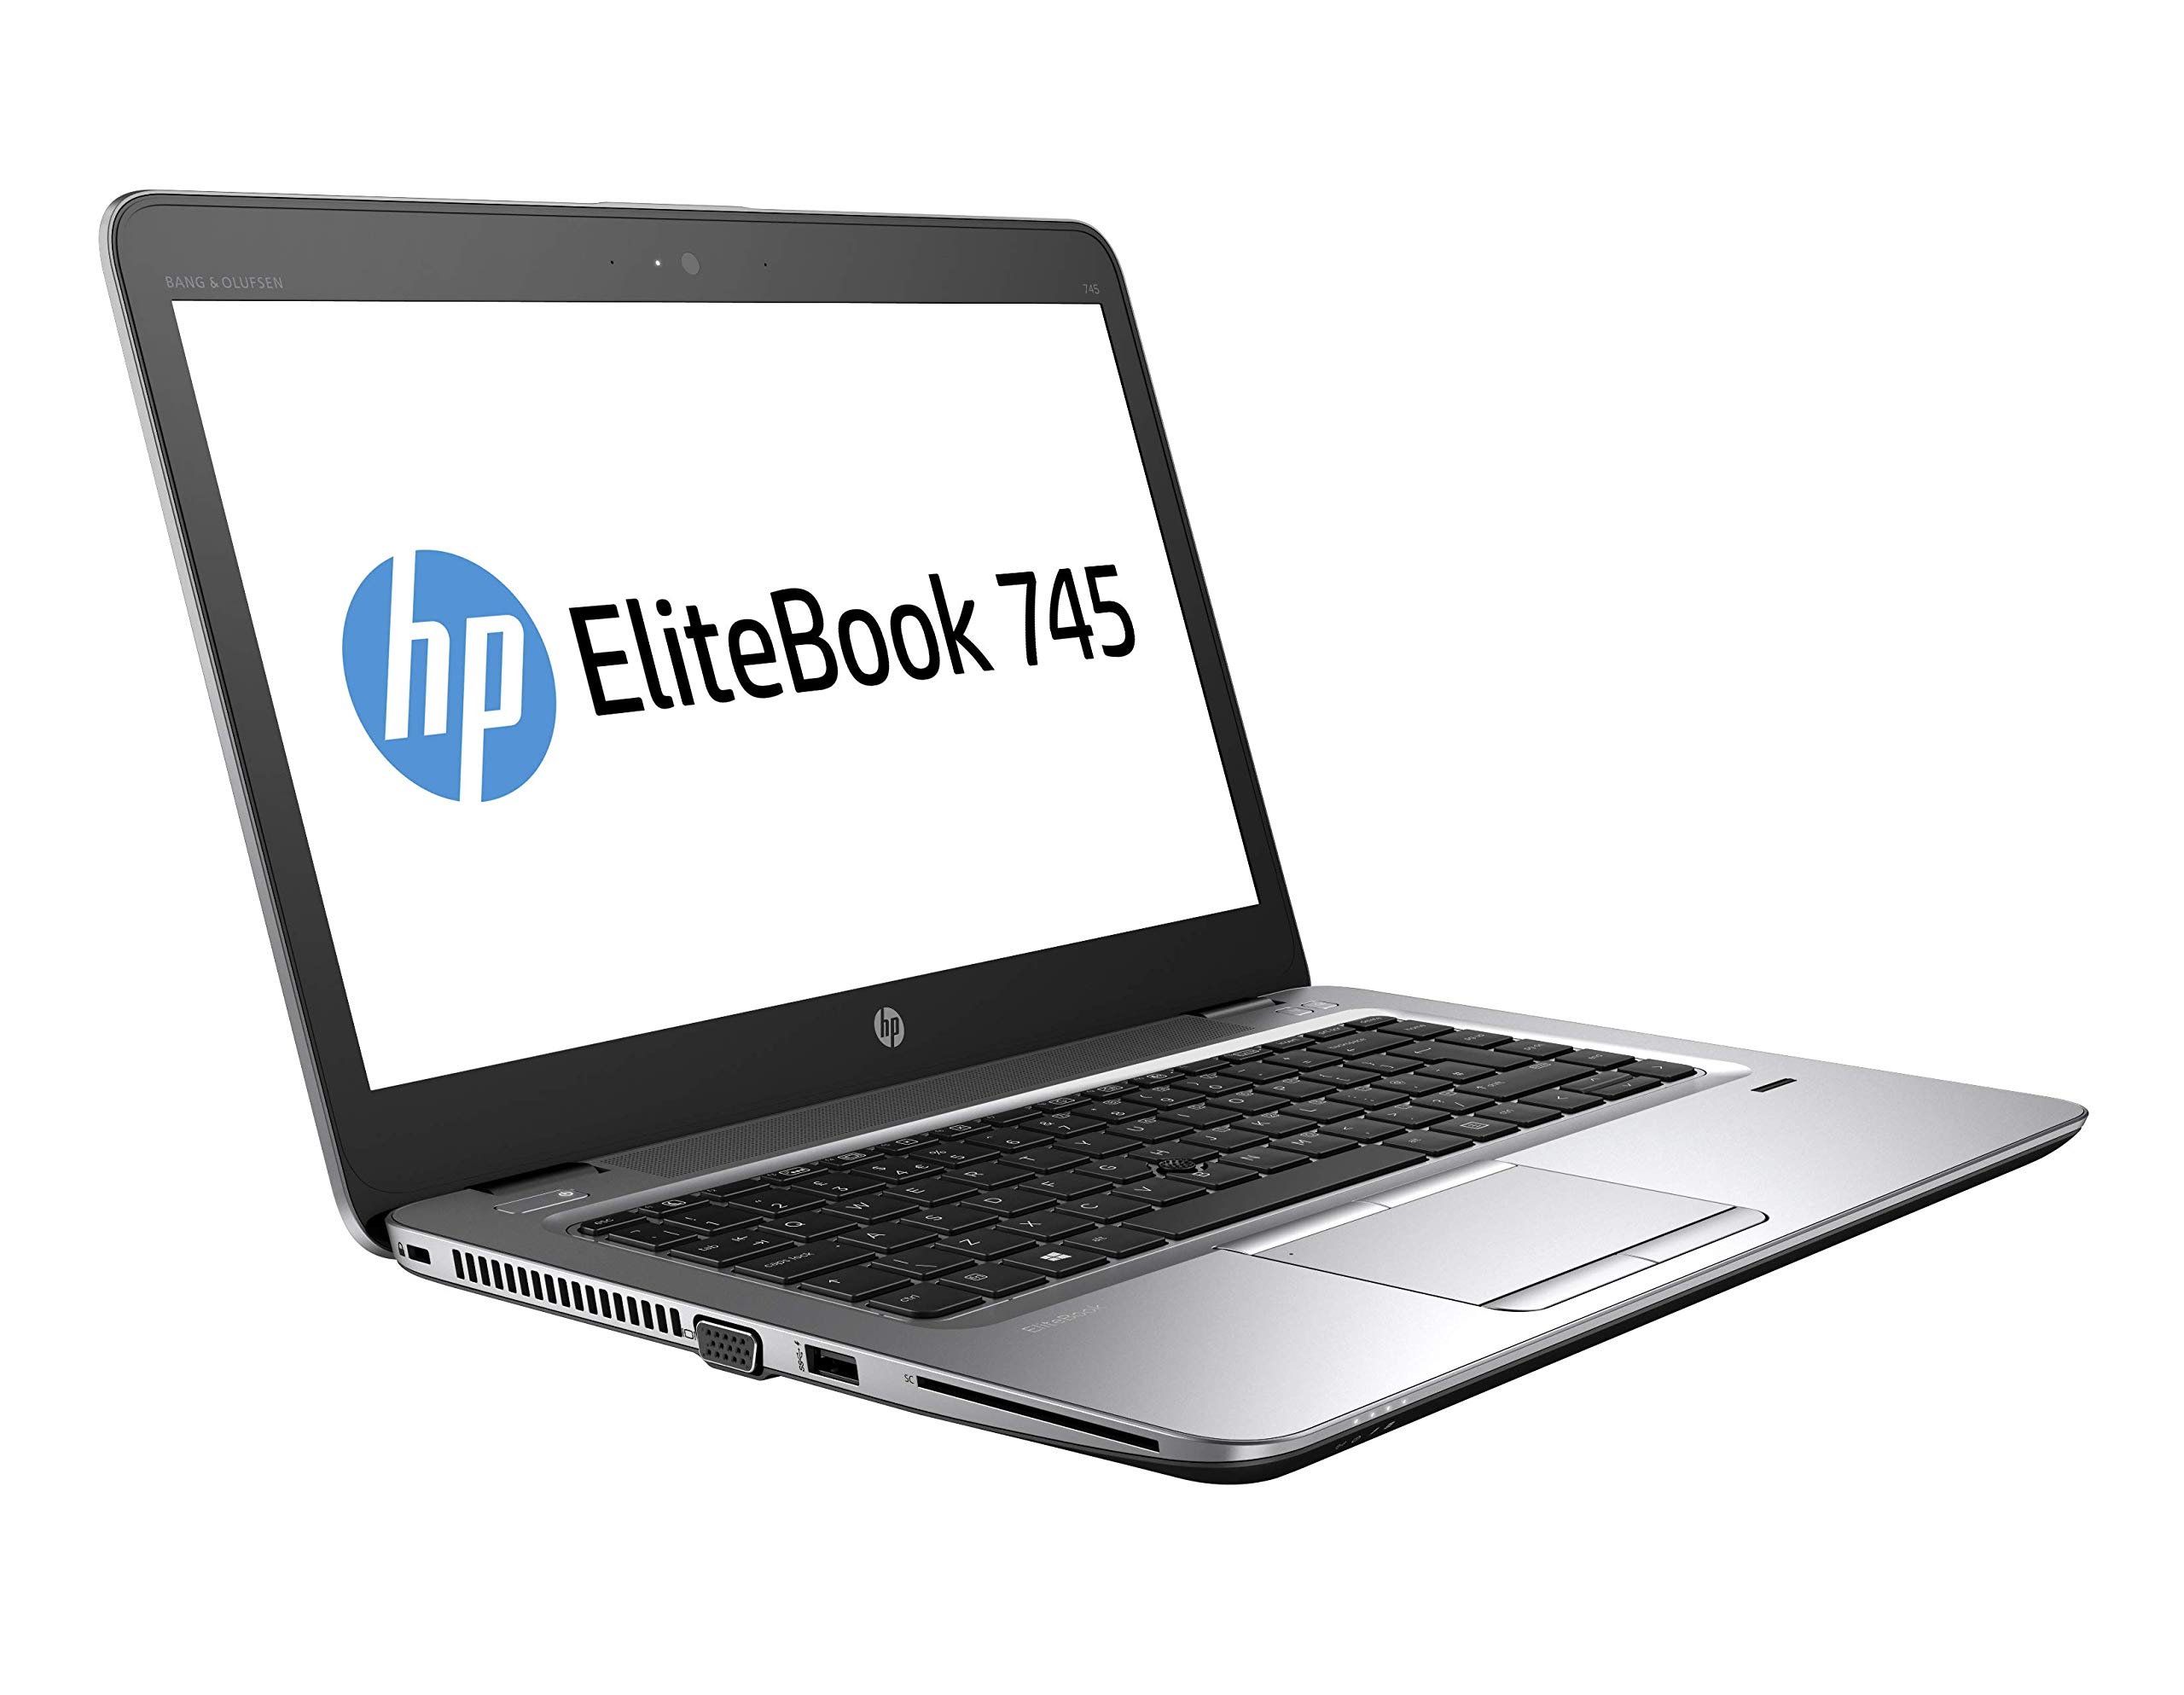 Portátil HP Ultrabook 745 G3 GRADO B (AMD PRO A10 8700B 1.8Ghz/8GB/240SSD-M.2/14FHD/NO-DVD/NO-LIC)